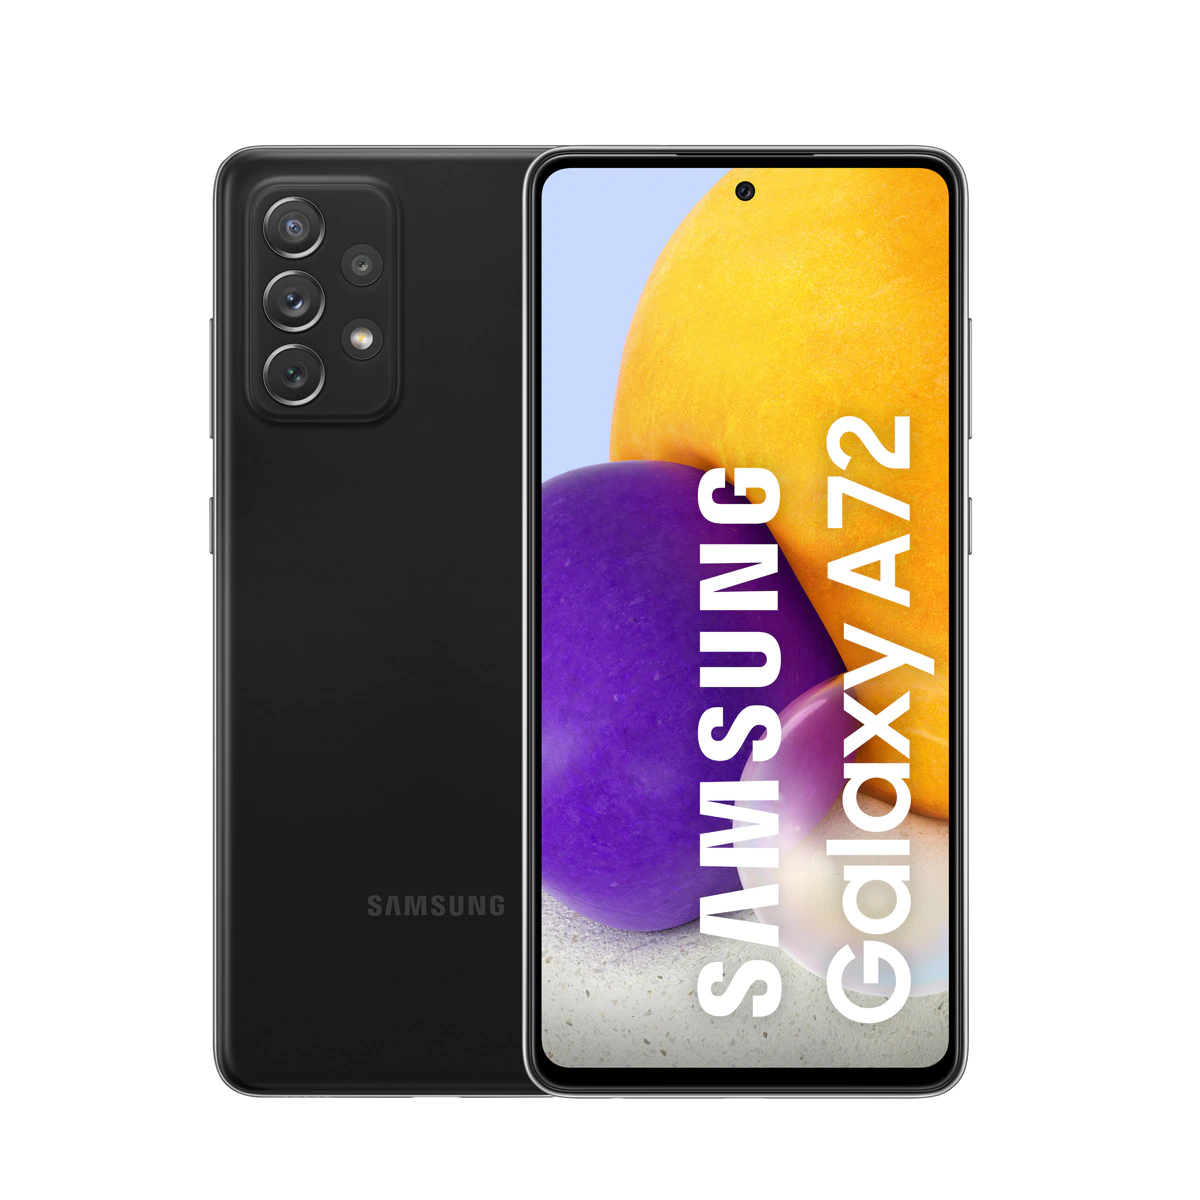 Samsung Galaxy A72 6 GB + 128 GB negro móvil libre